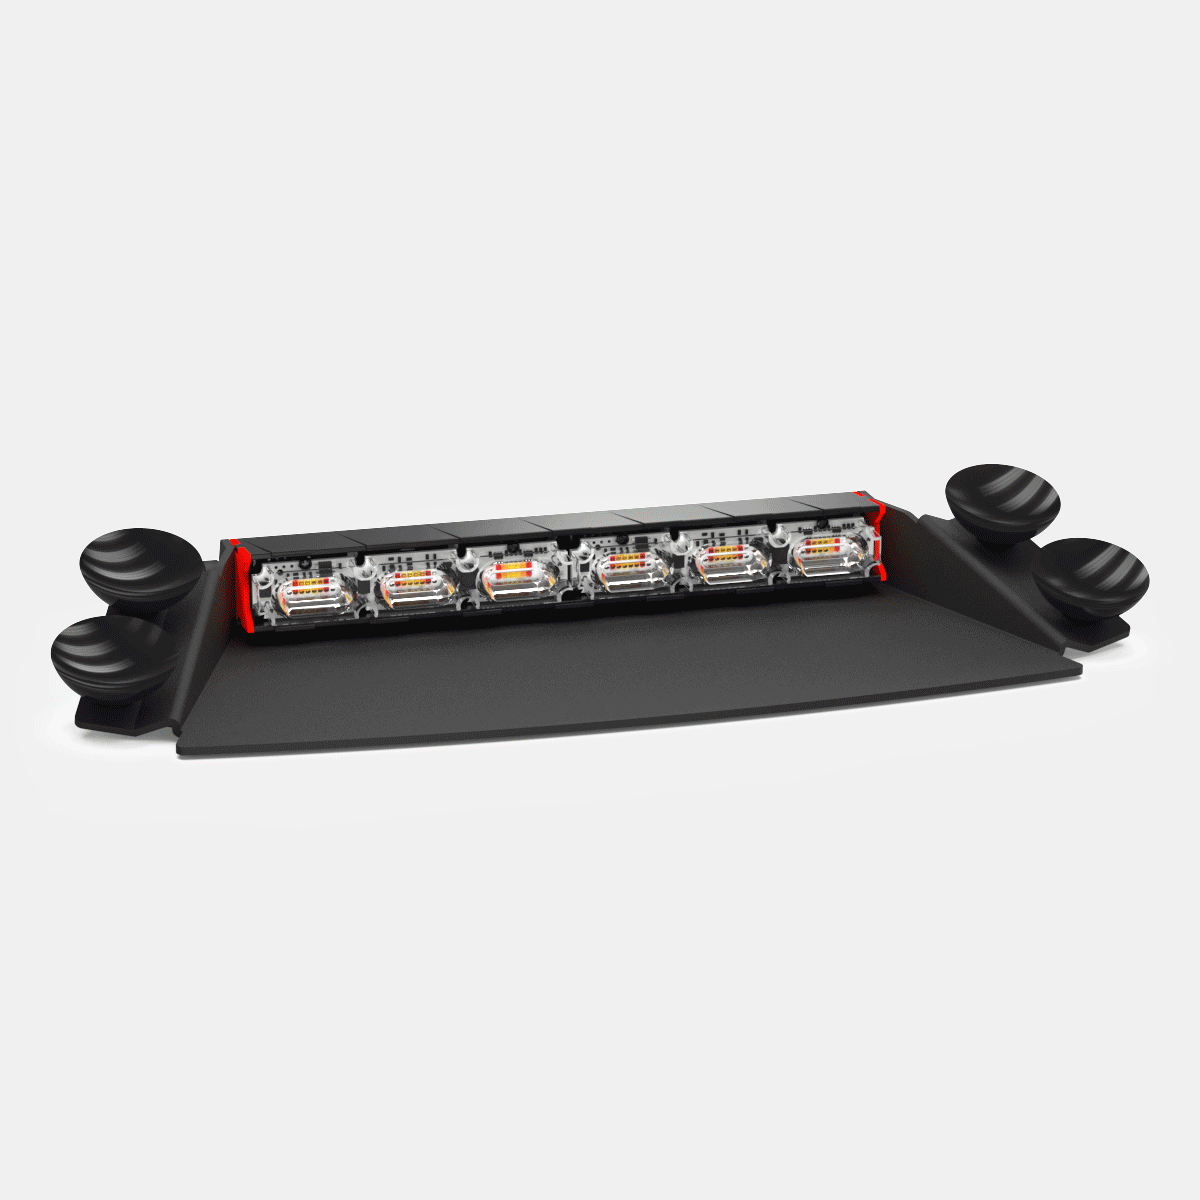 Feniex Fusion 600 Dash Deck Warning Light Bar MADE IN THE USA 4 WATT LEDS 